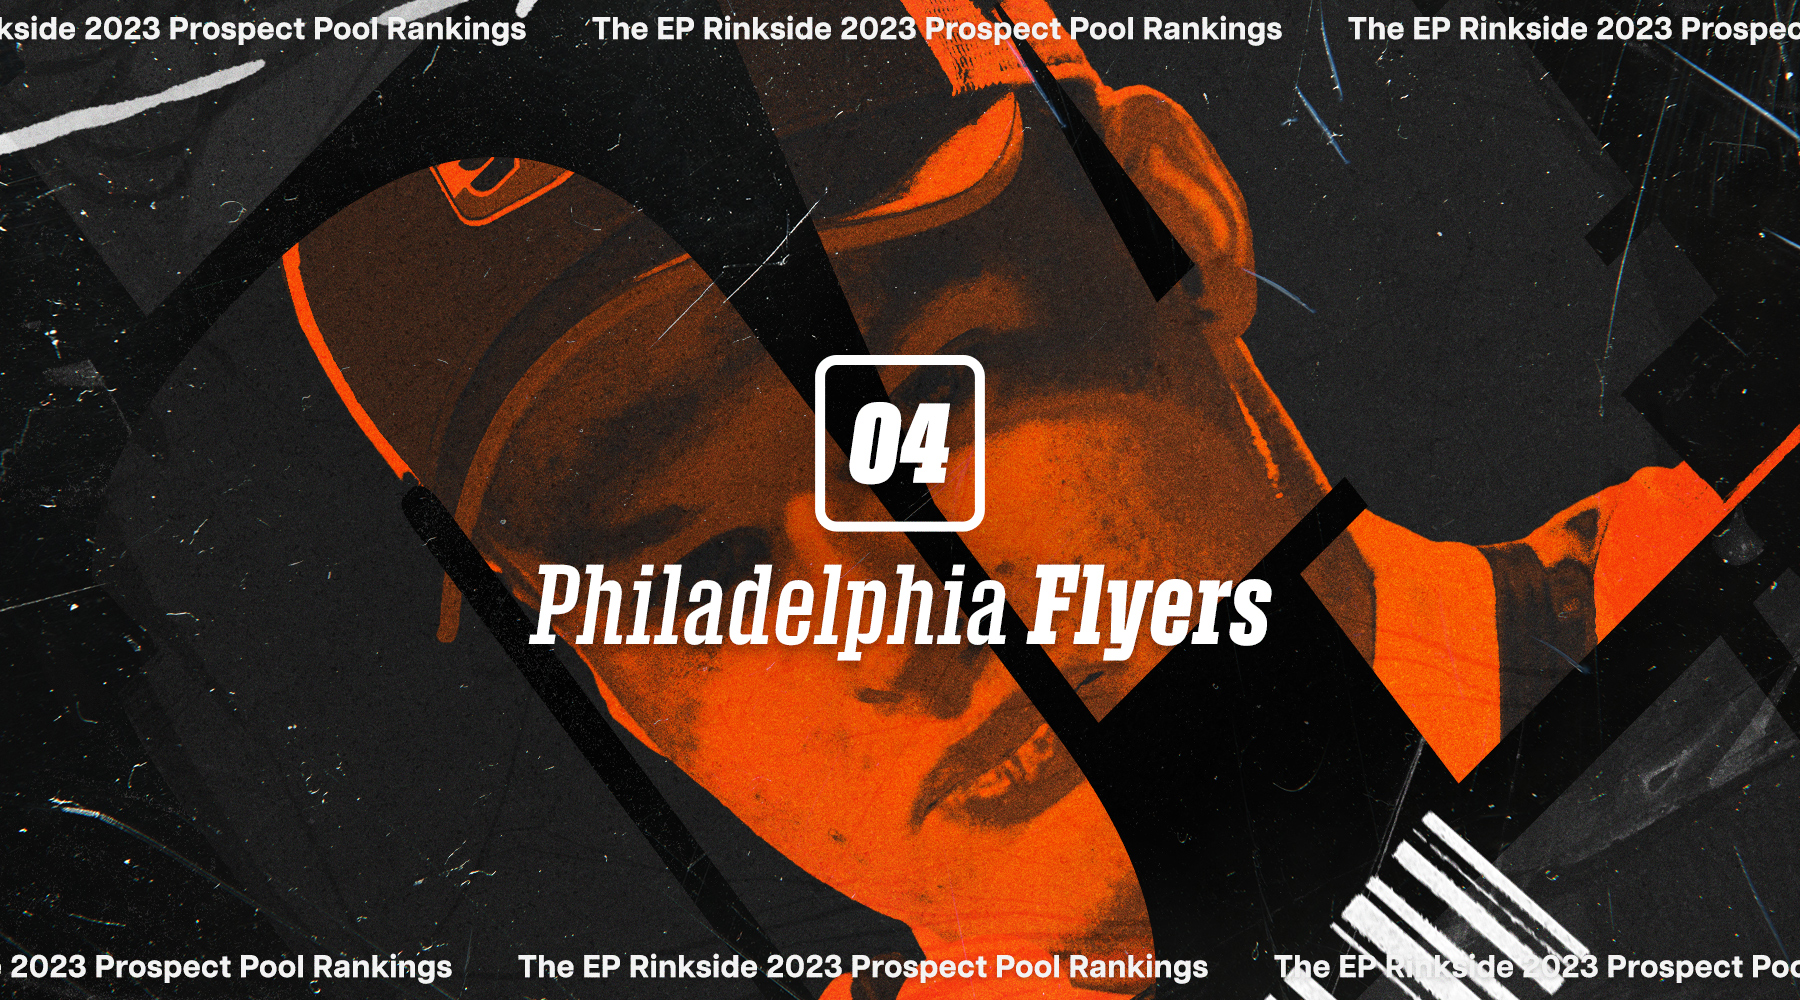 EP Rinkside 2023 NHL Prospect Pool Rankings: No. 4-ranked Philadelphia Flyers